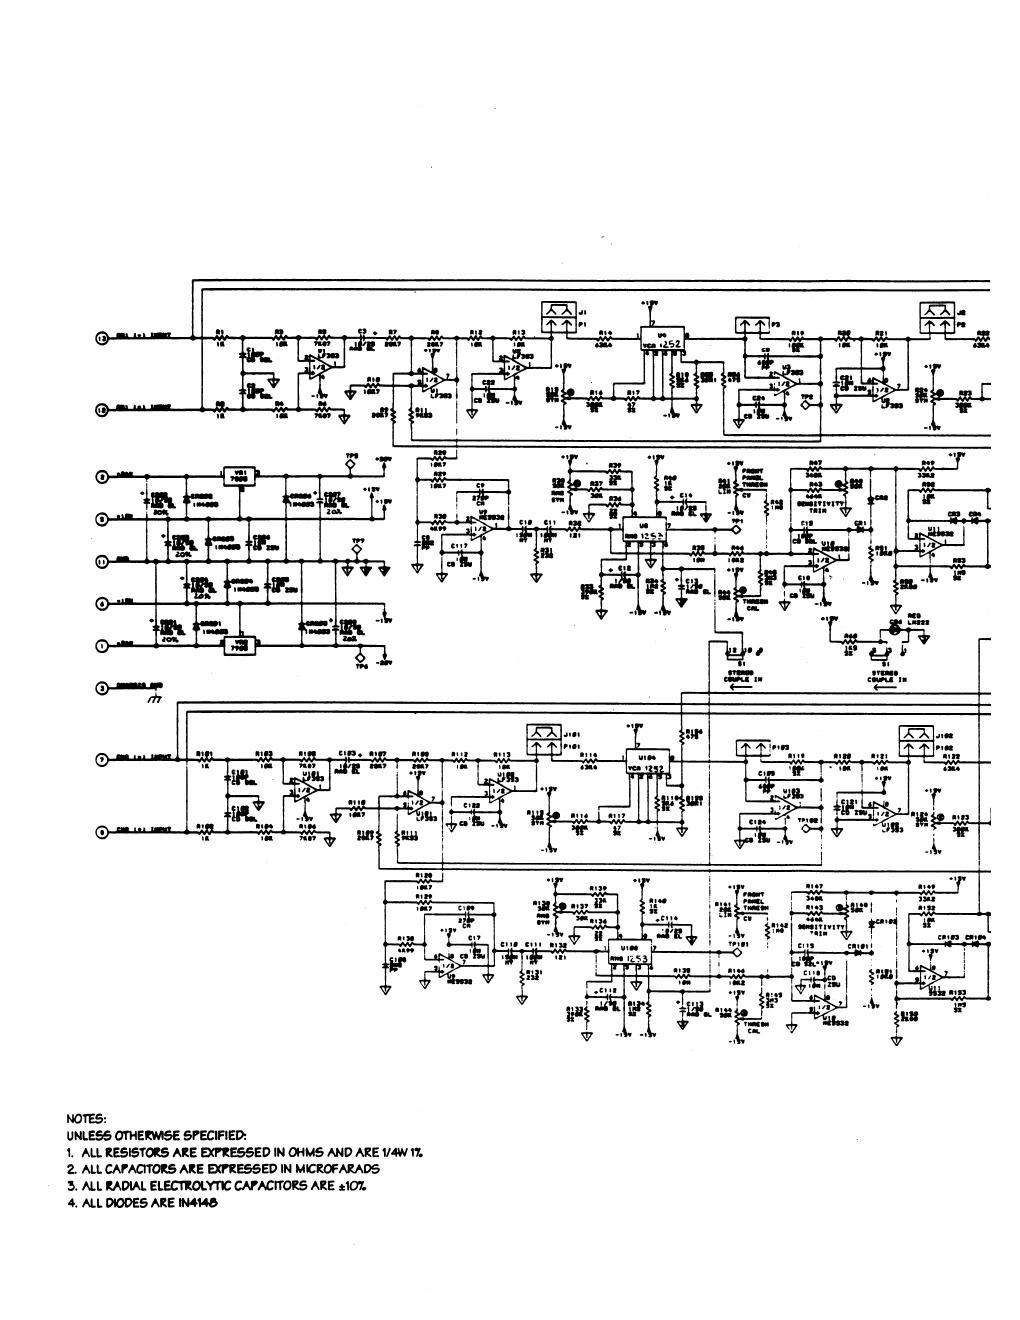 dbx 929 schematic copy